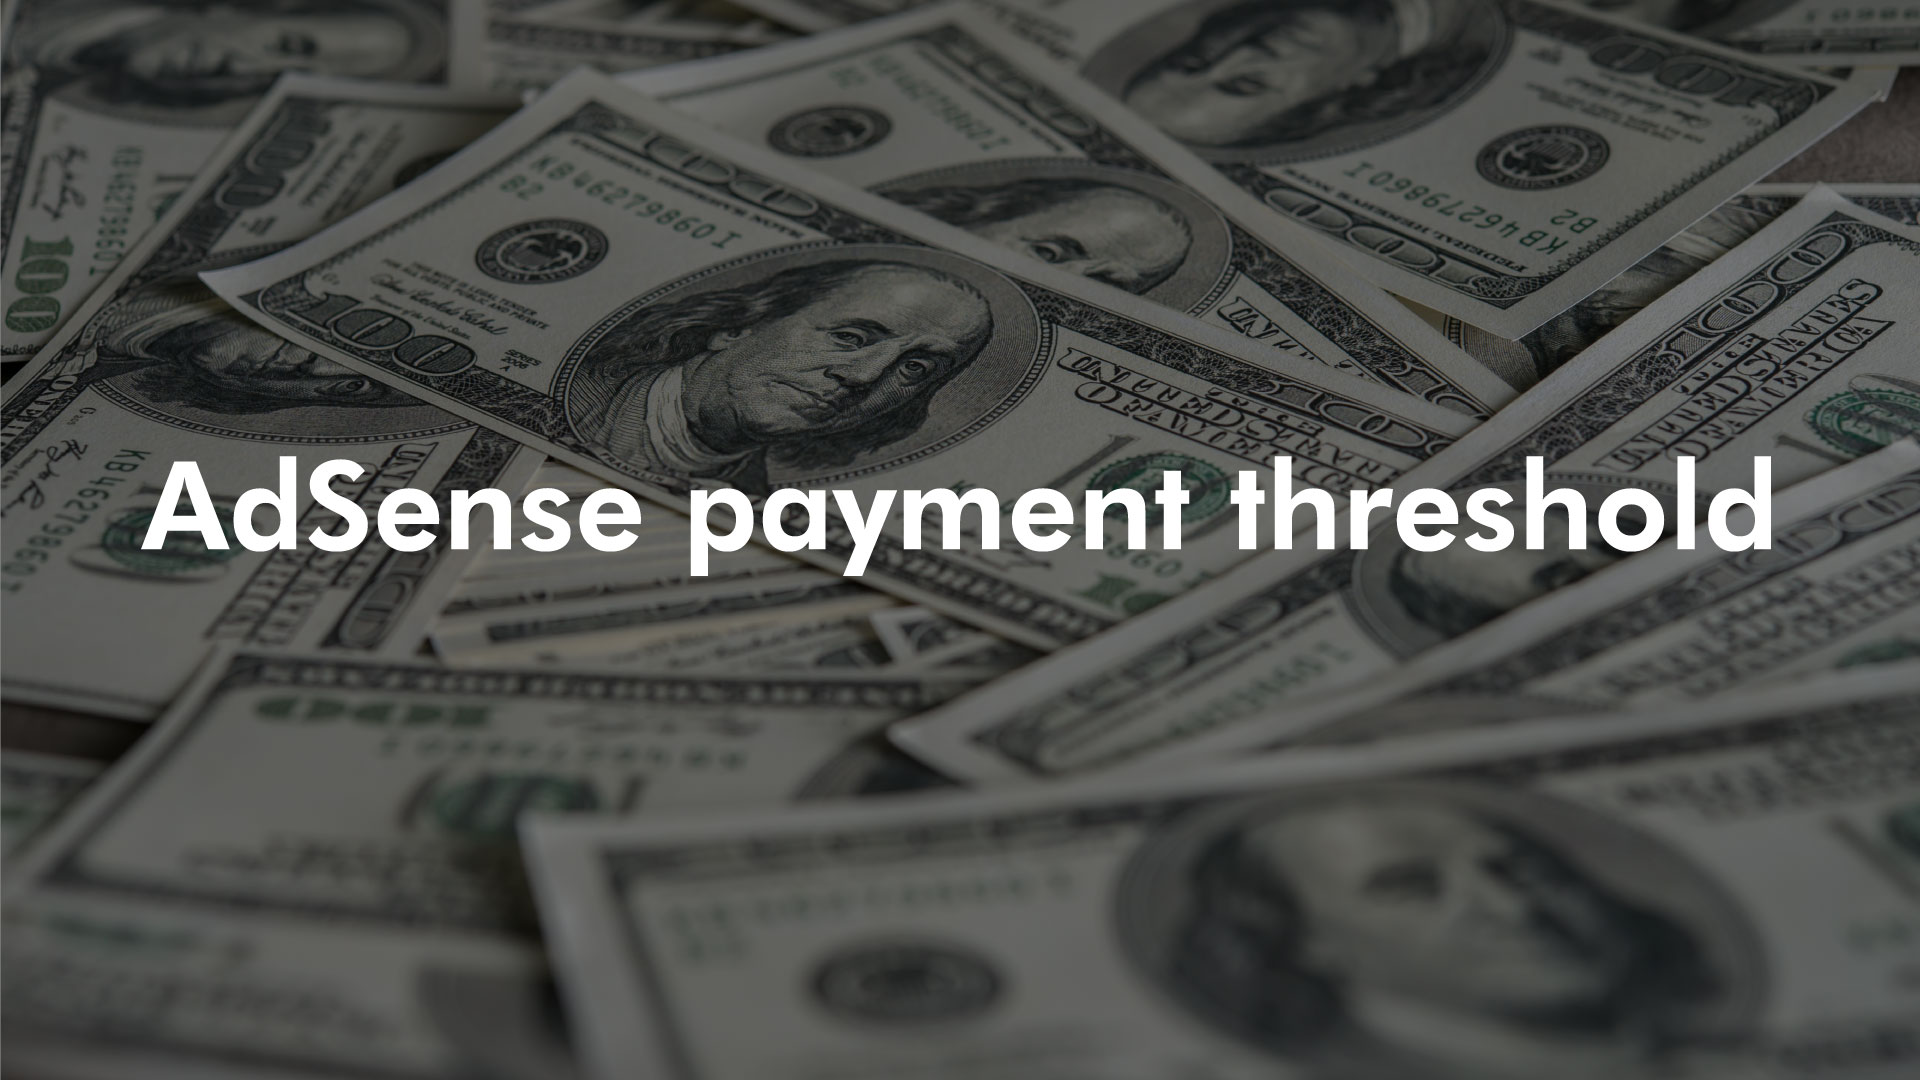 AdSense Payment Threshold